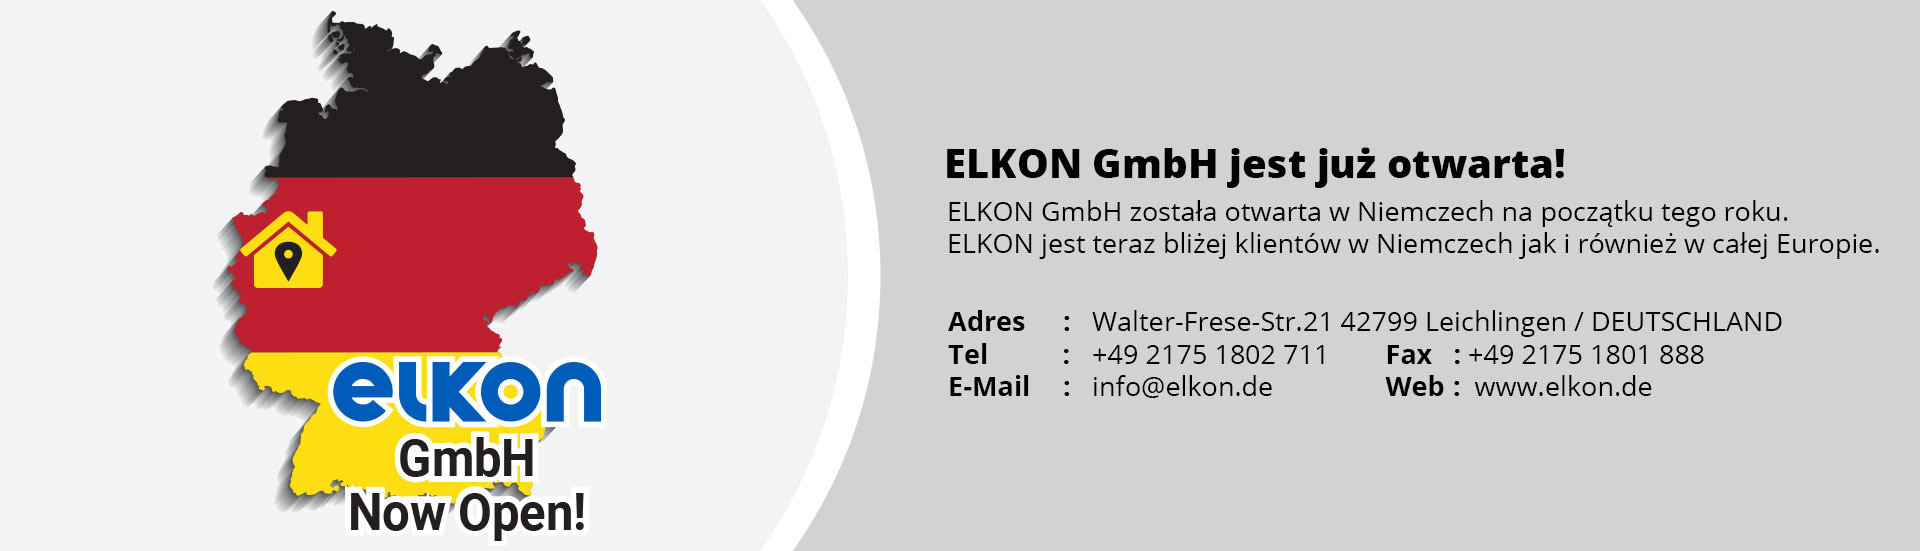 2-Elkon-Gmbh_7